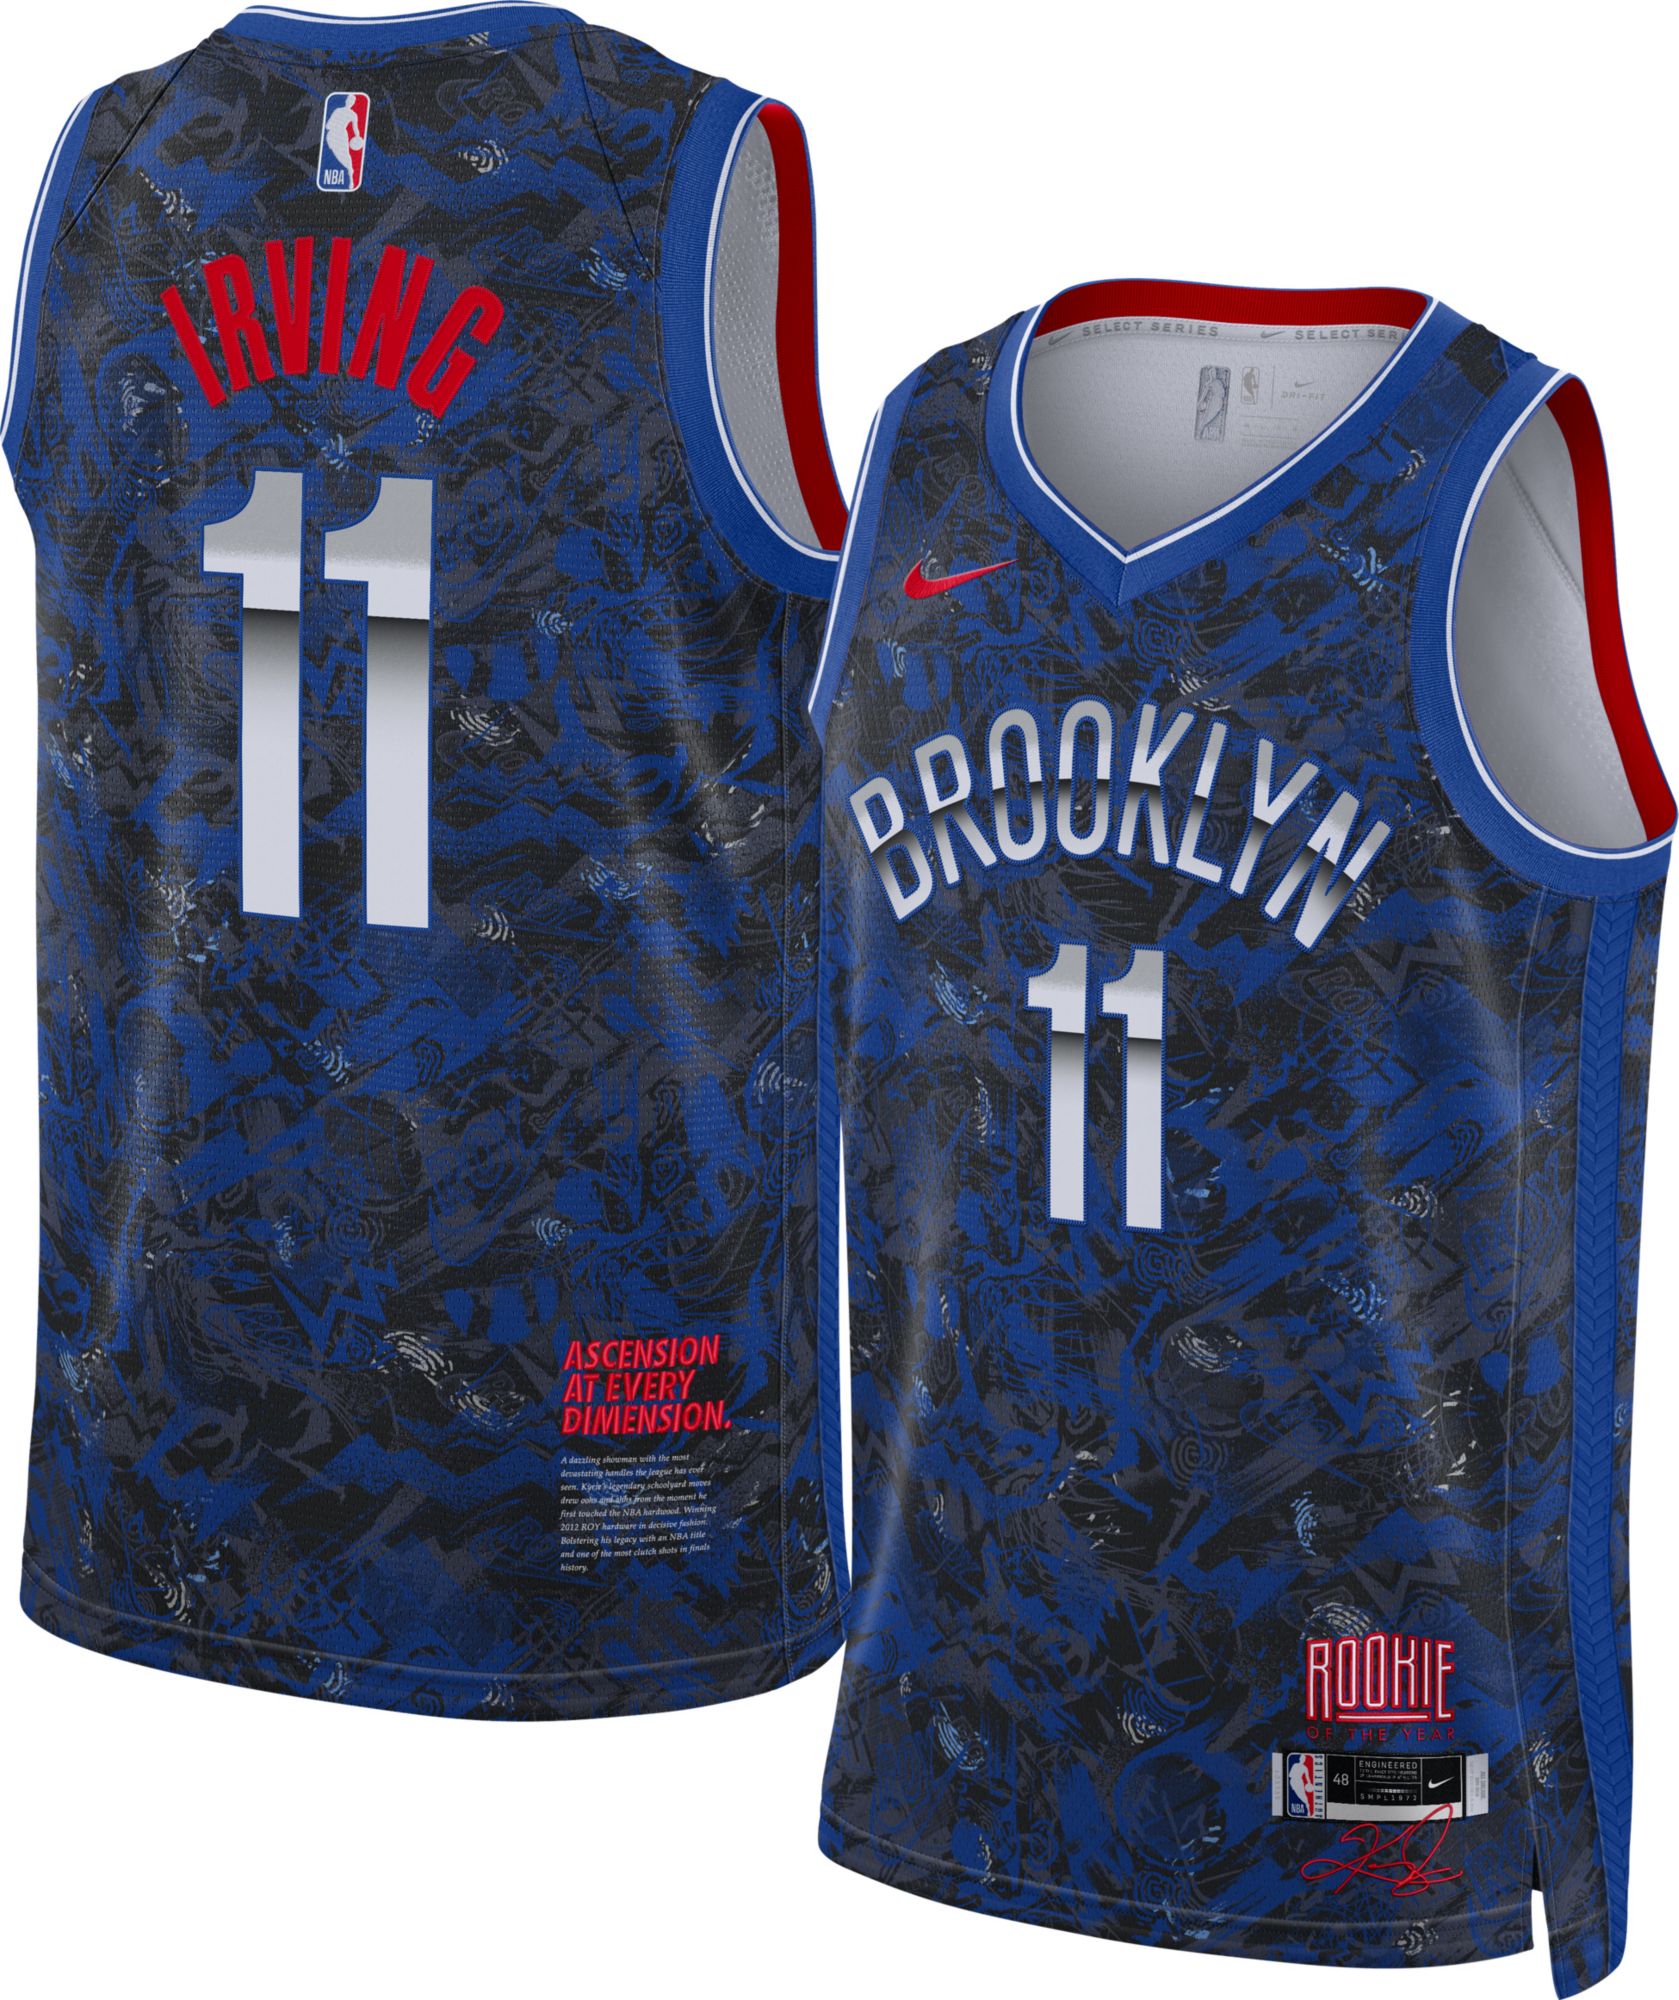 Jordan Brooklyn Nets Kyrie Irving #11 Jersey XL for Sale in Los Angeles, CA  - OfferUp